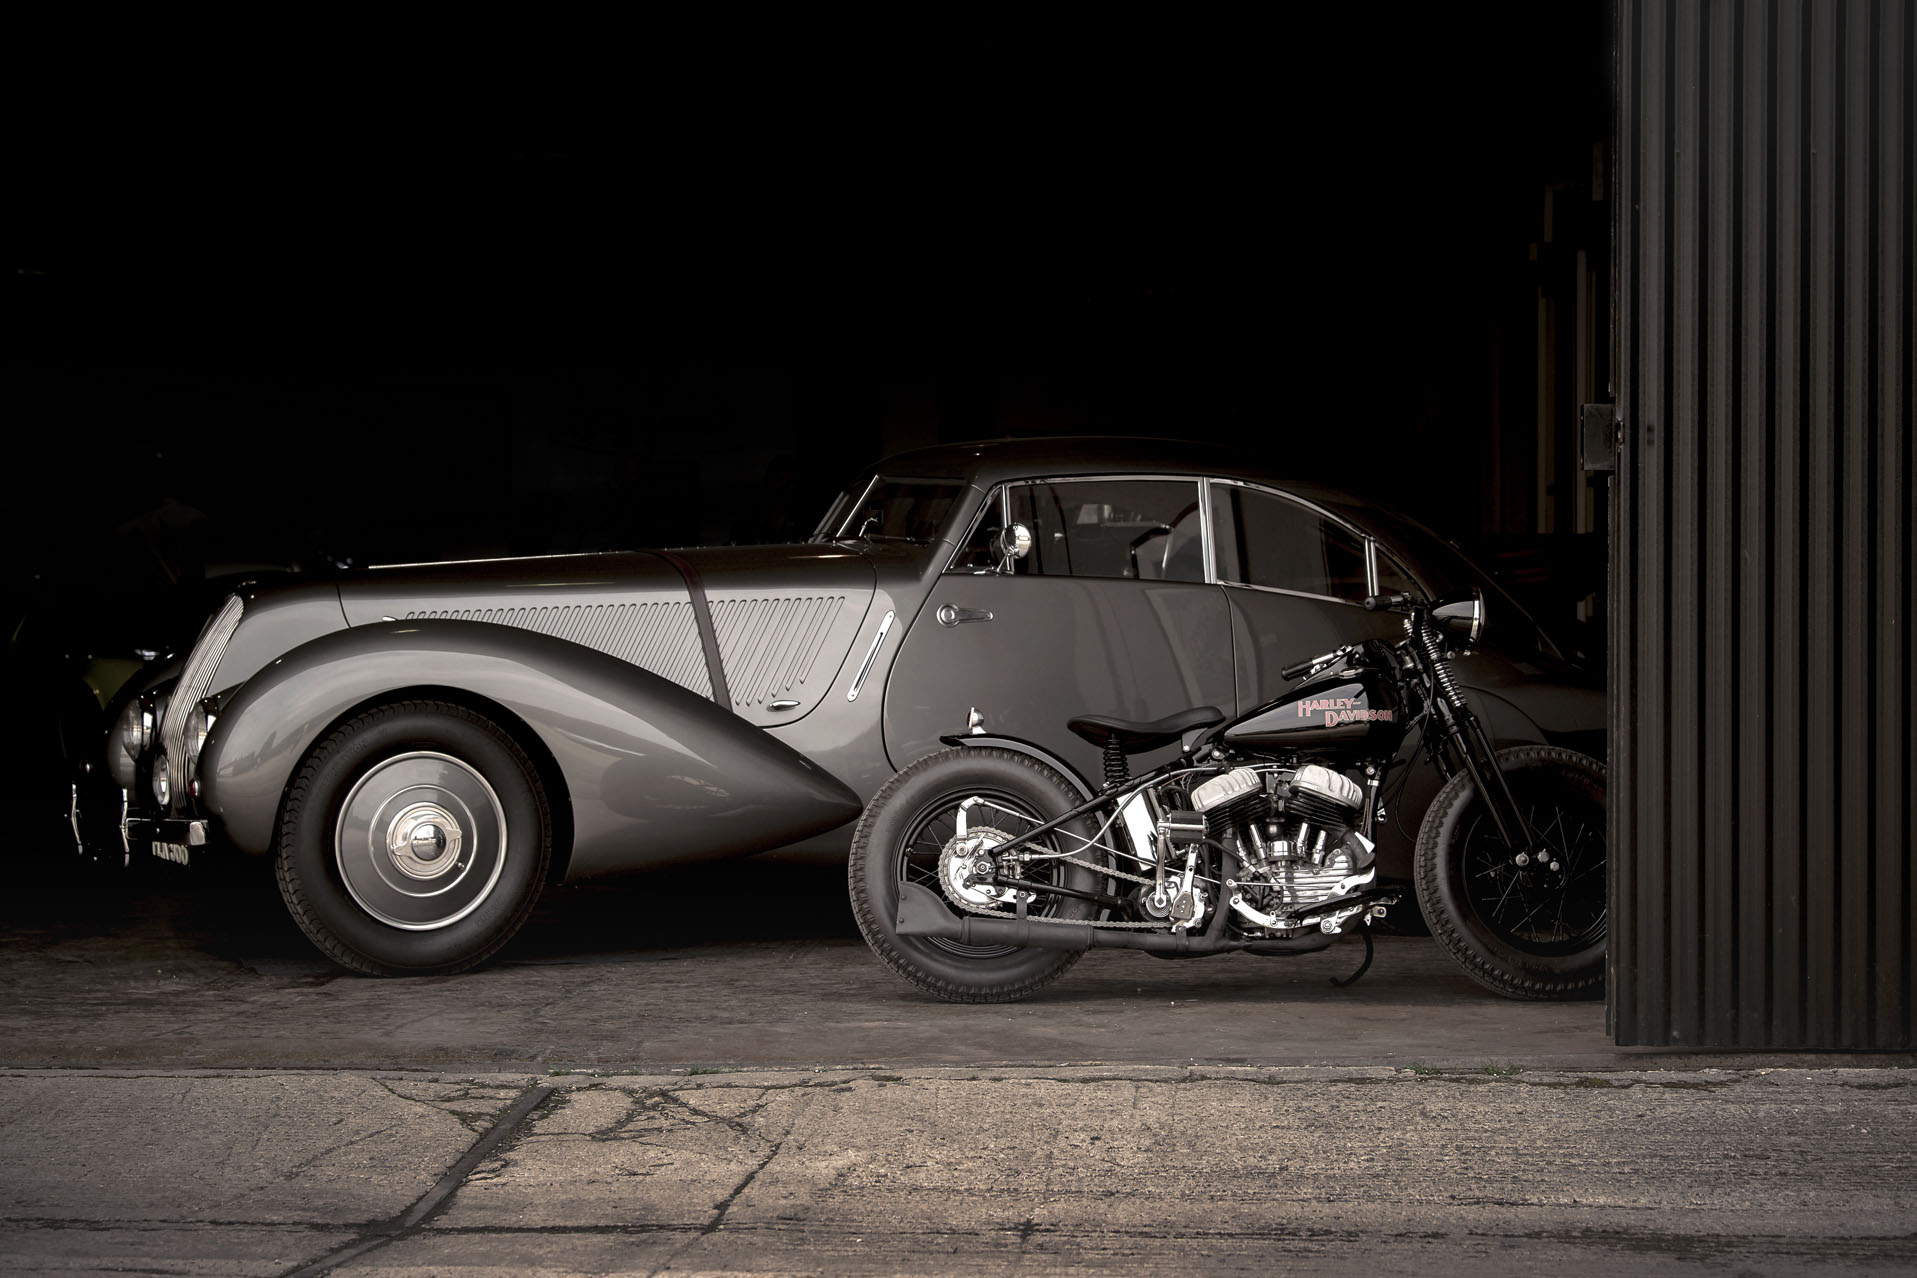 Classic car and Harley Davidson